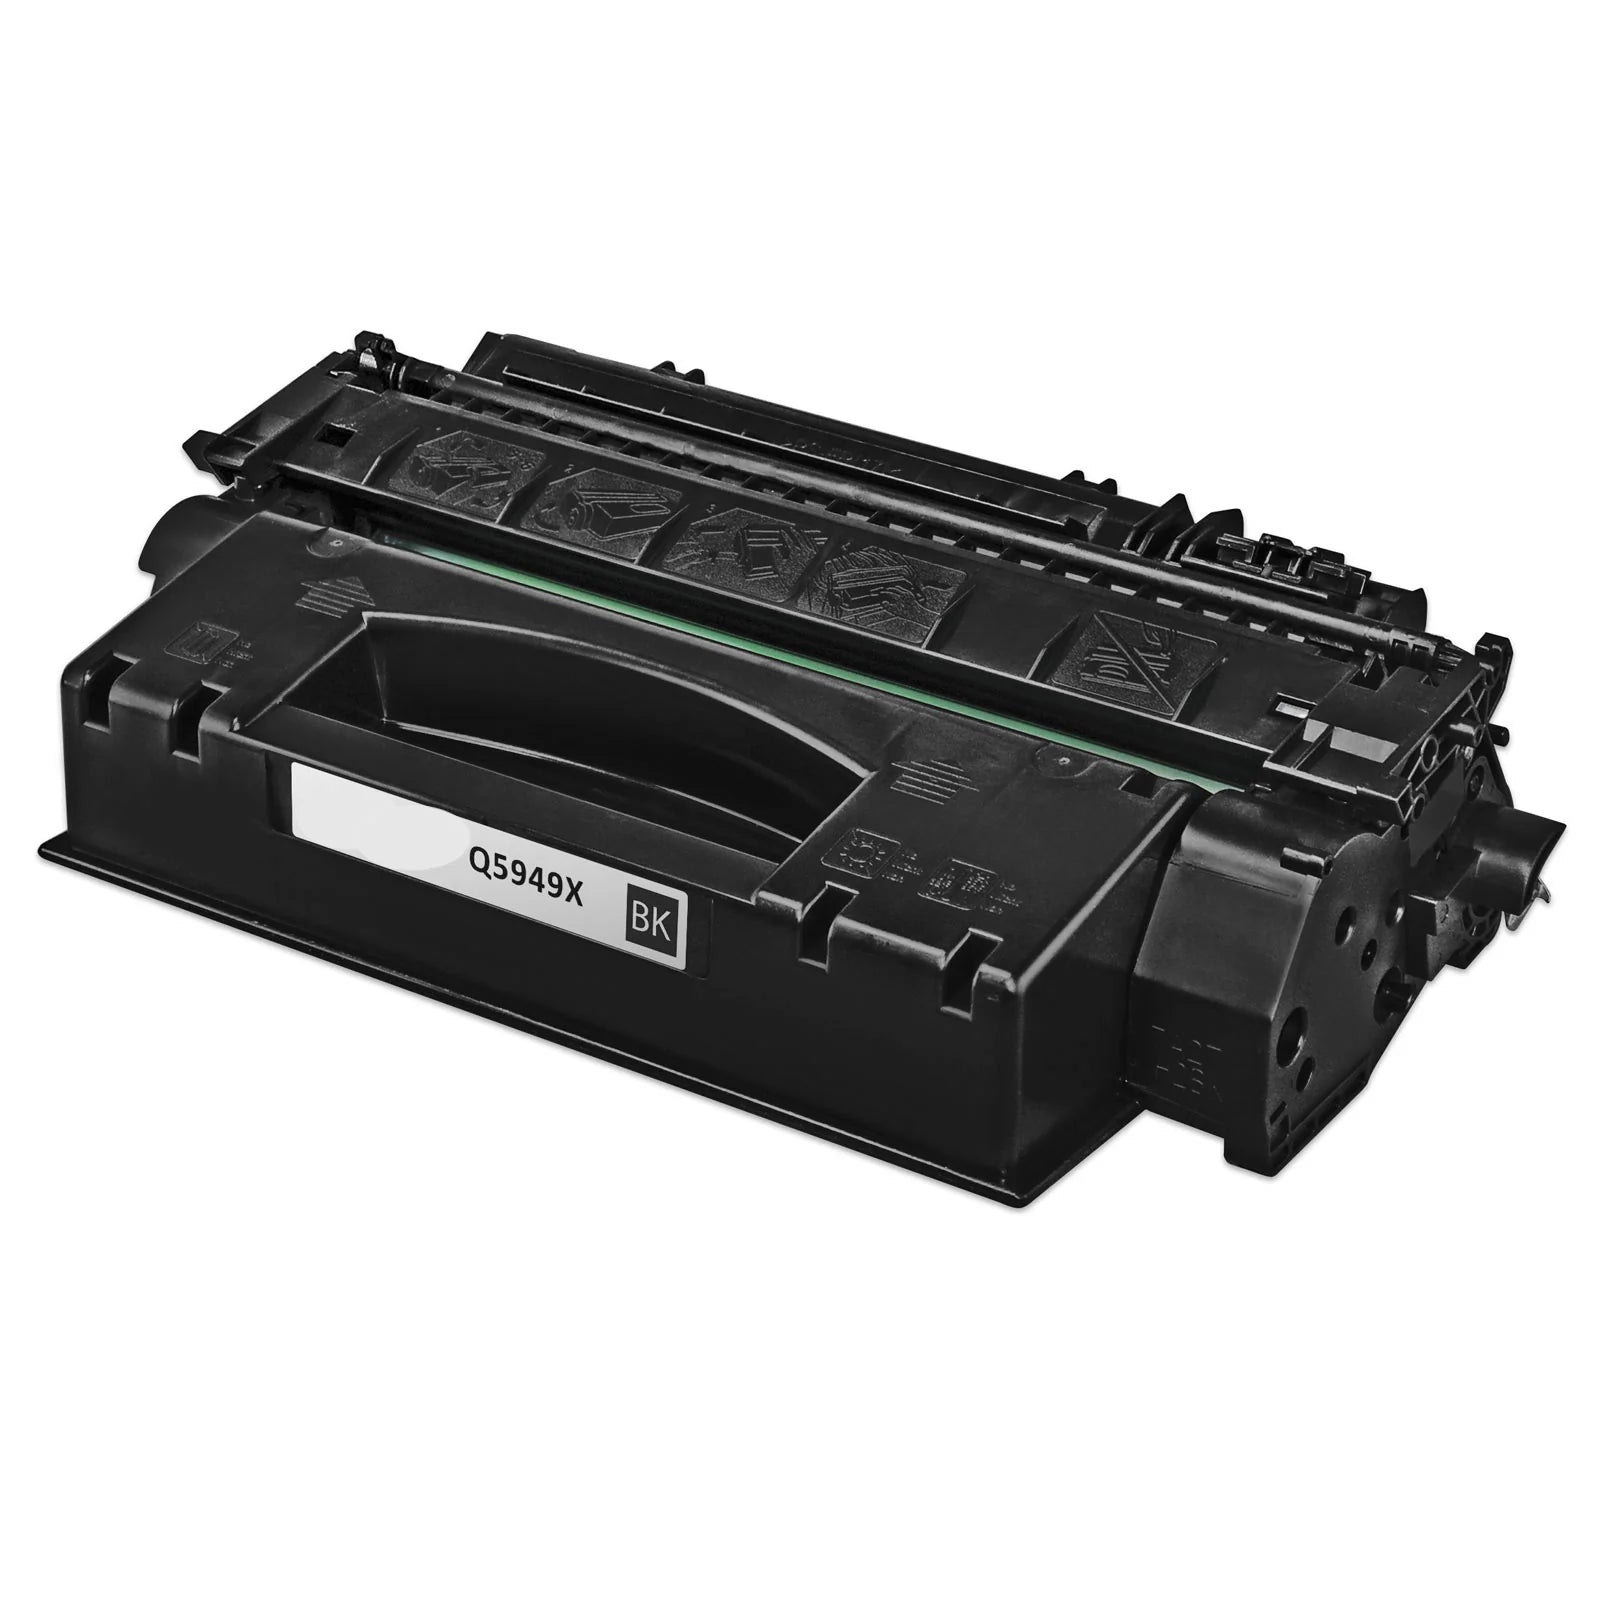 Absolute Toner AbsoluteToner Toner Laser Cartridge Compatible With HP MICR 49X (Q5949X) Black High Yield HP MICR Cartridges